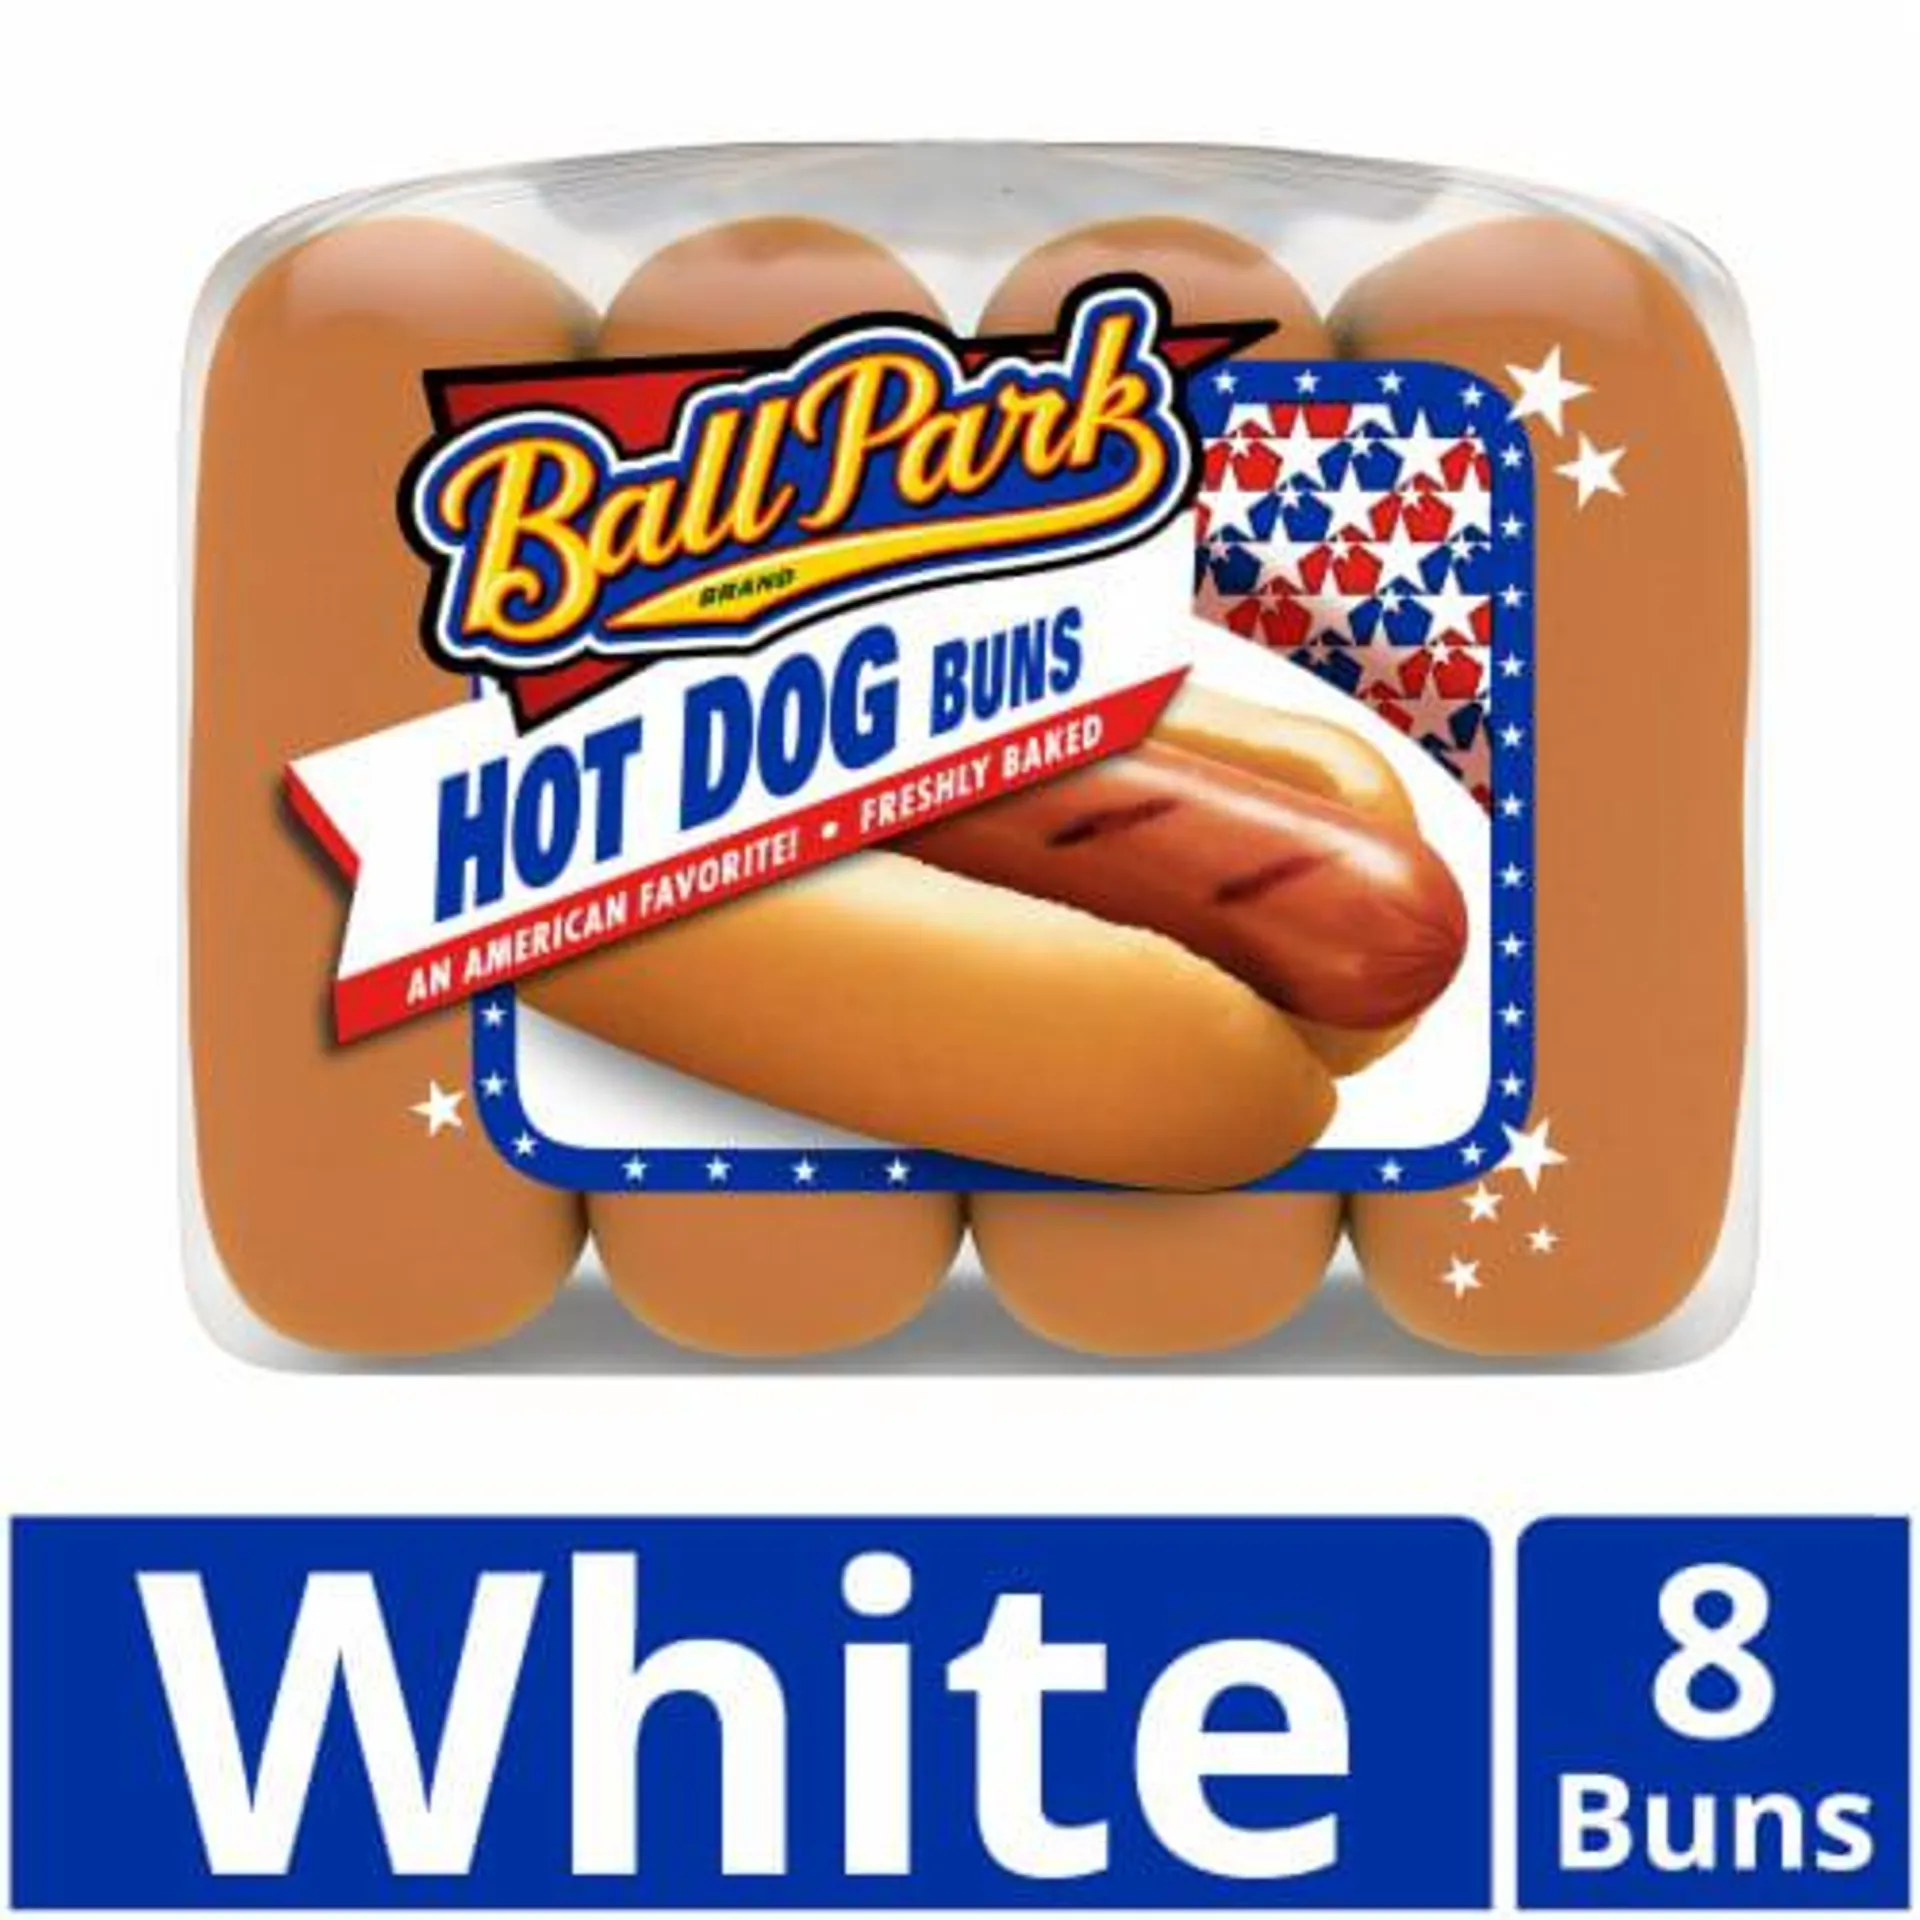 Ball Park White Hot Dog Buns